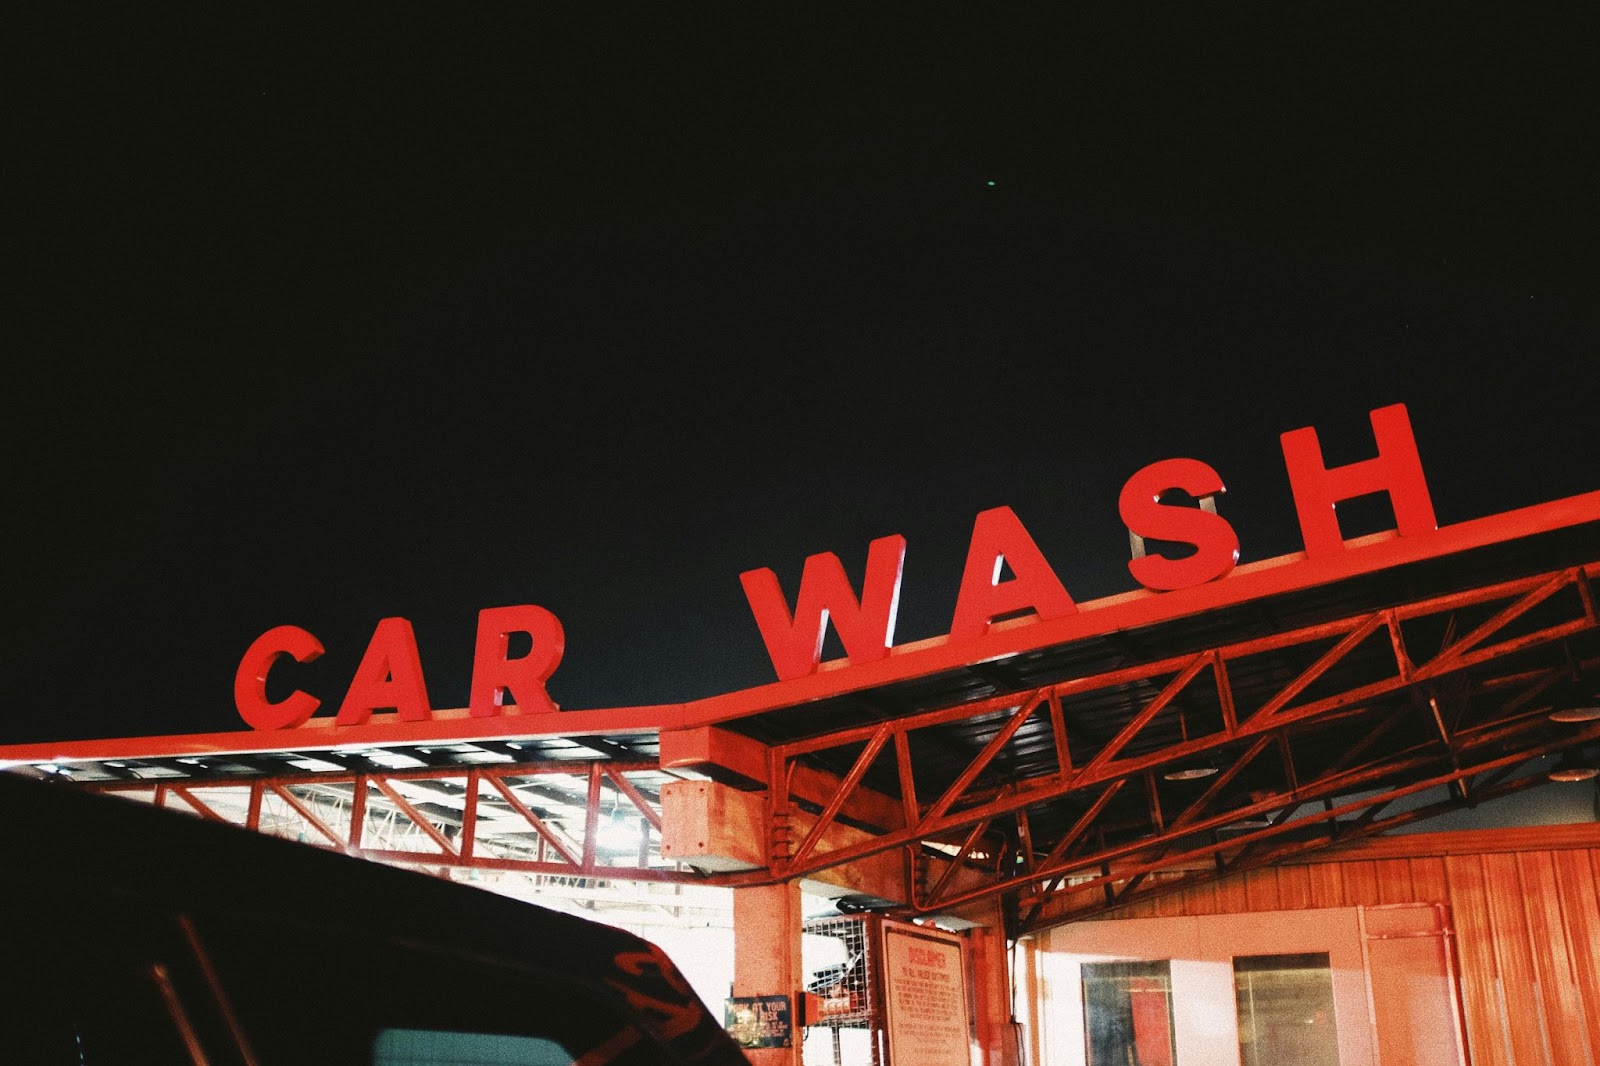 Car wash building